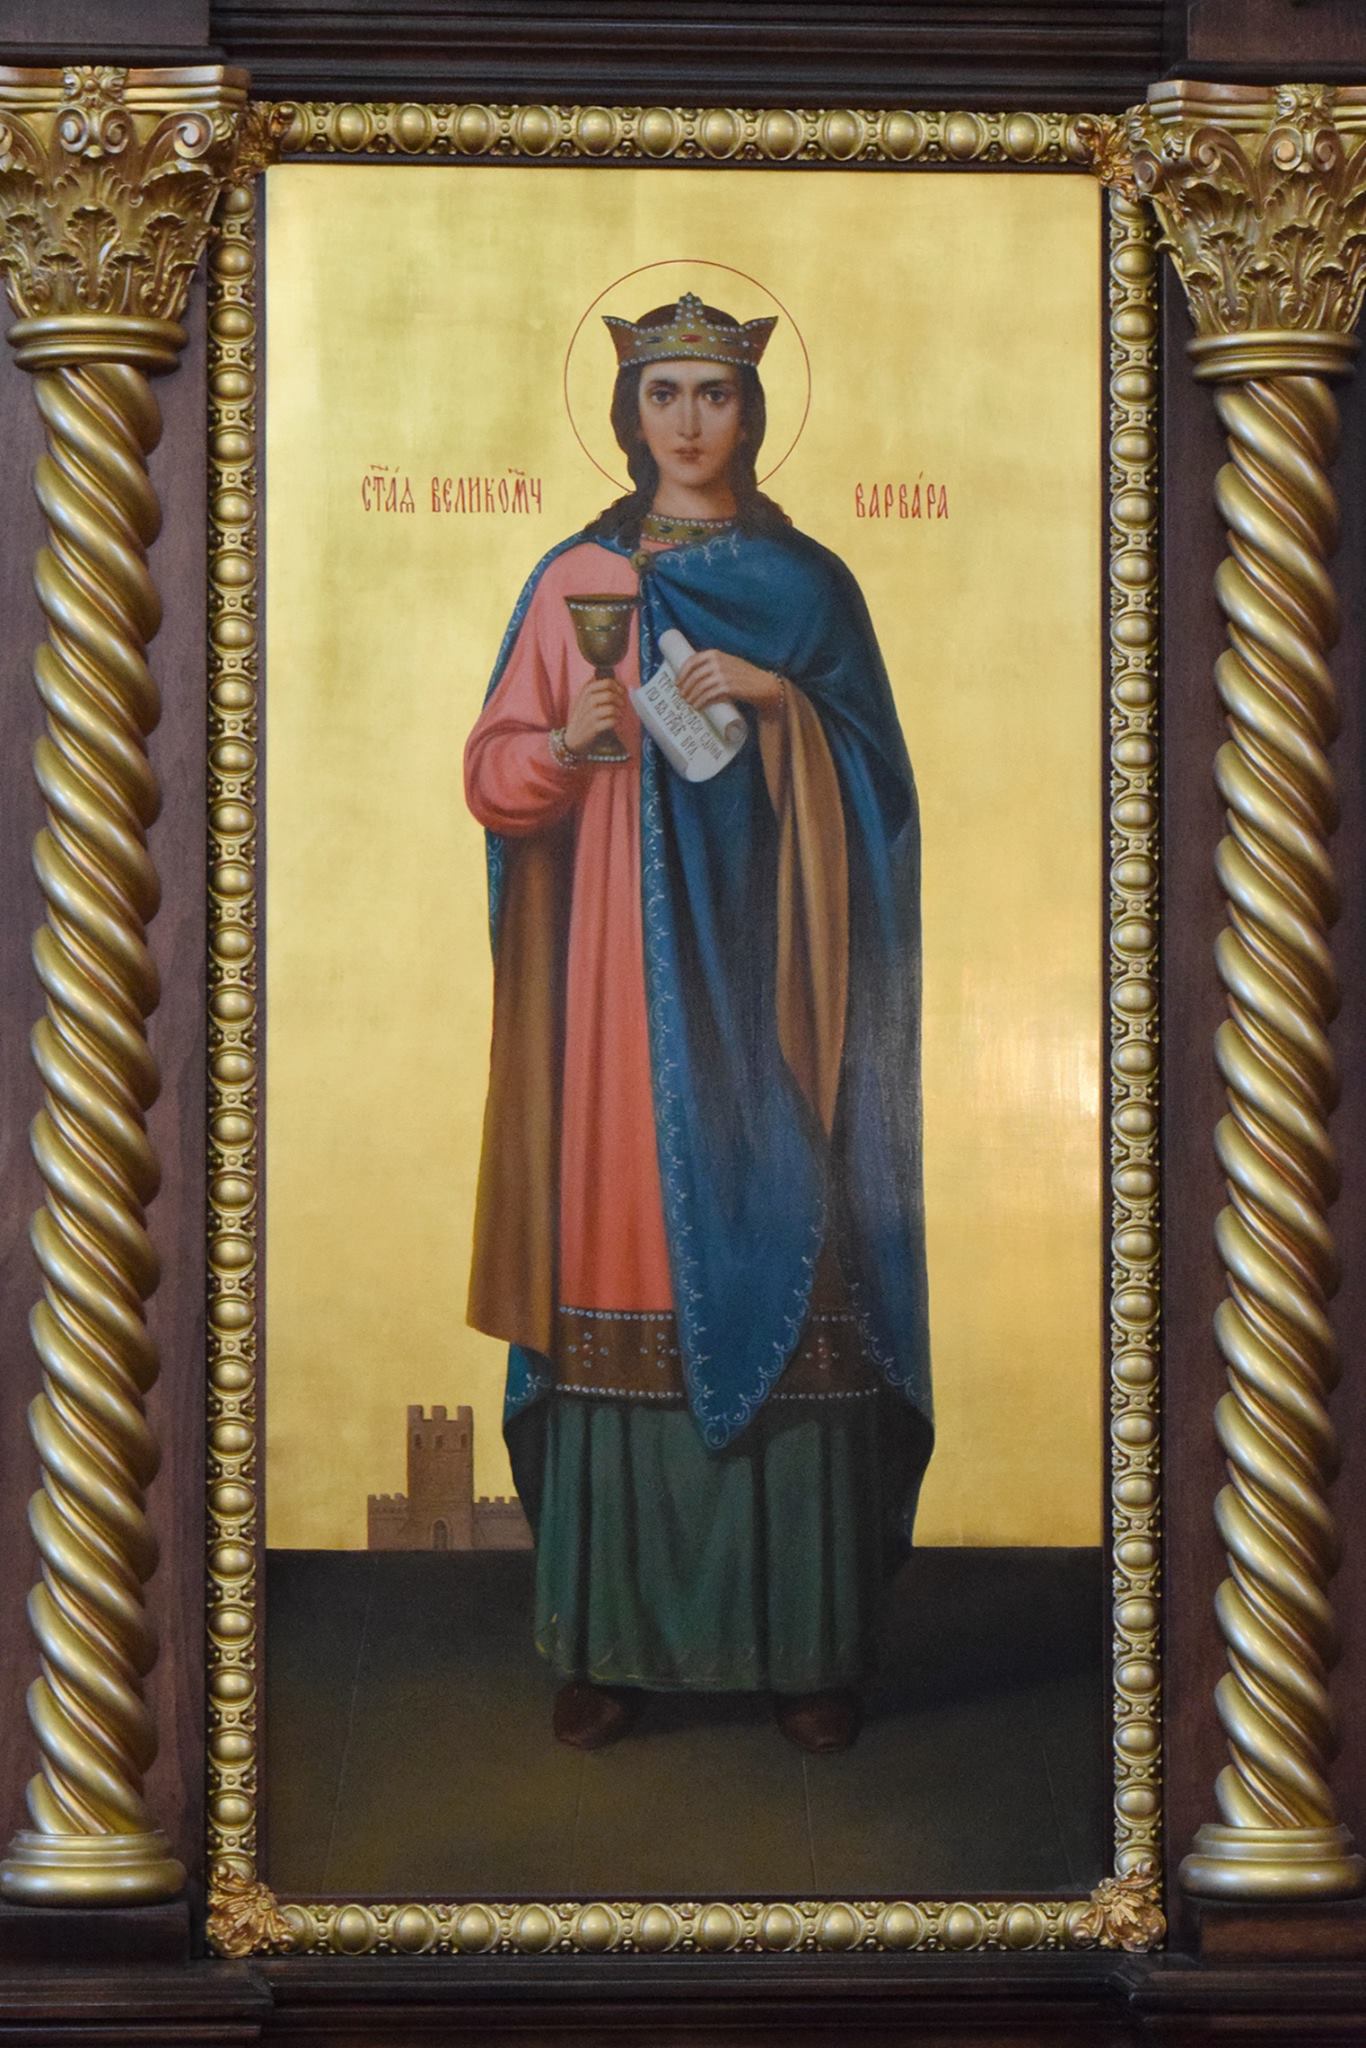 Great-martyr Barbara - Великомучениця Варвара